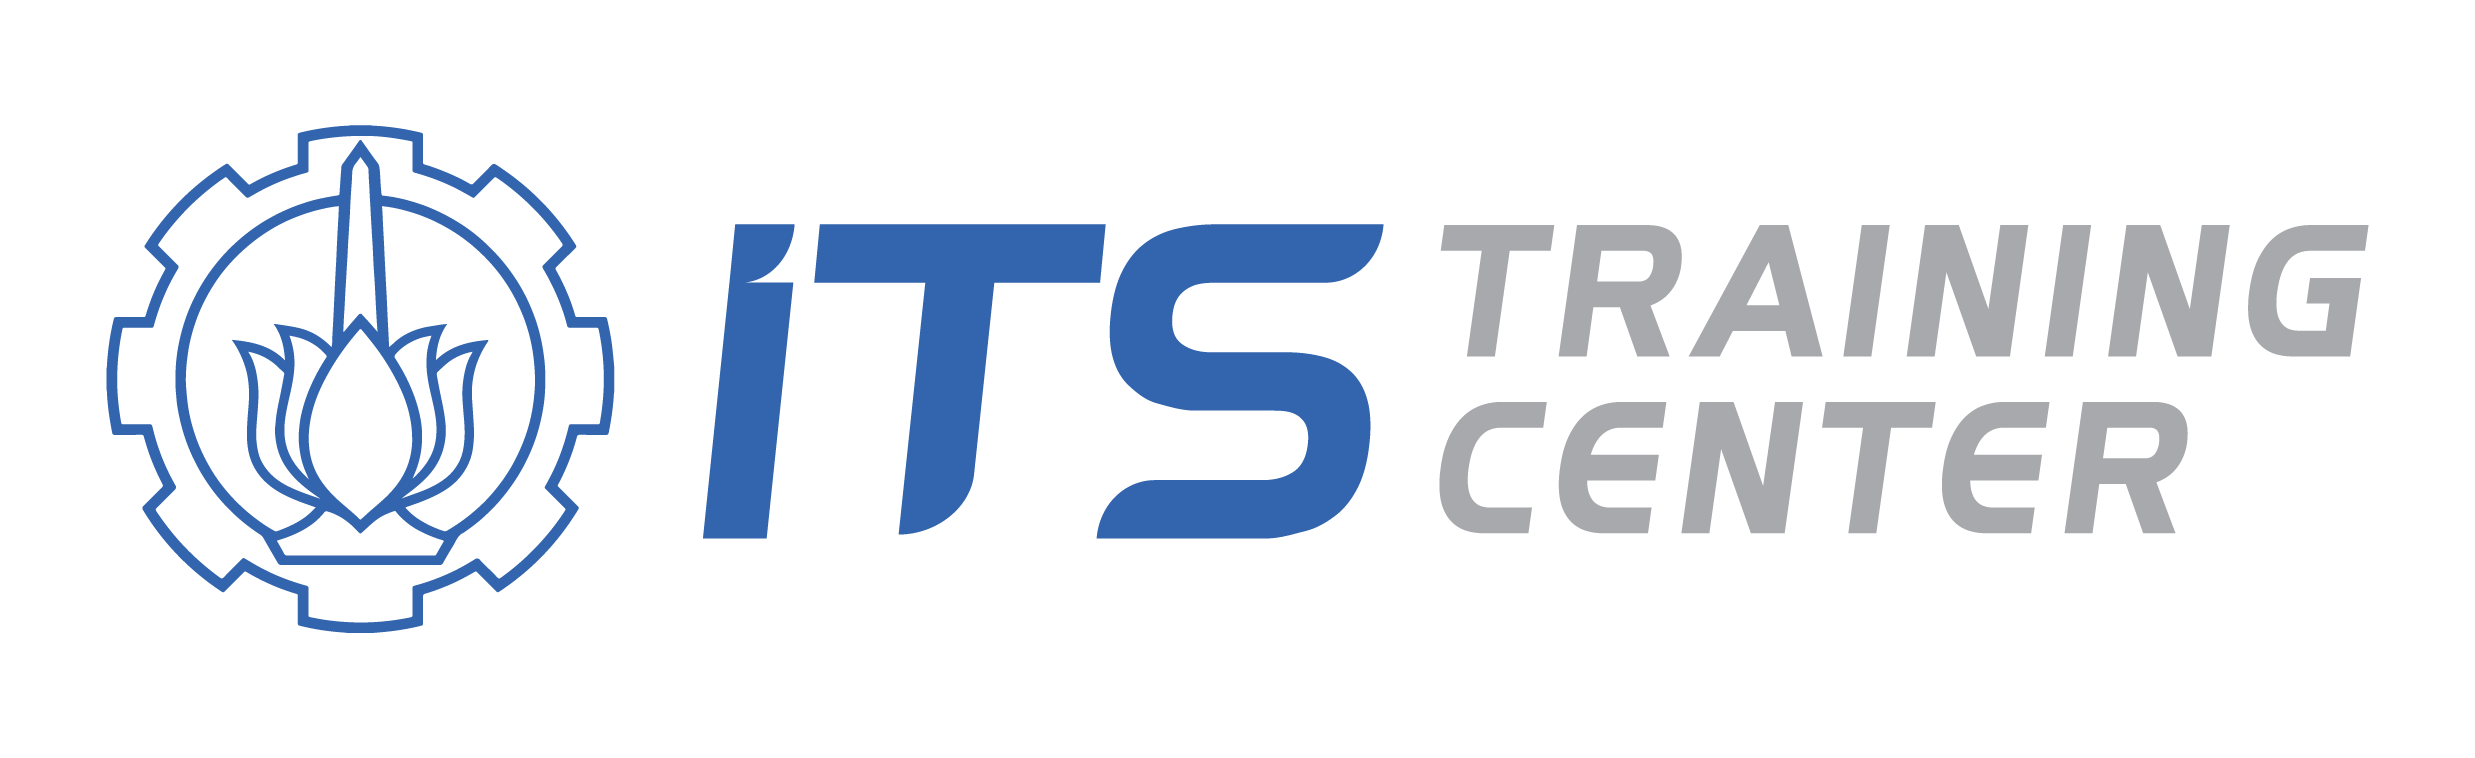 ITS Training Center